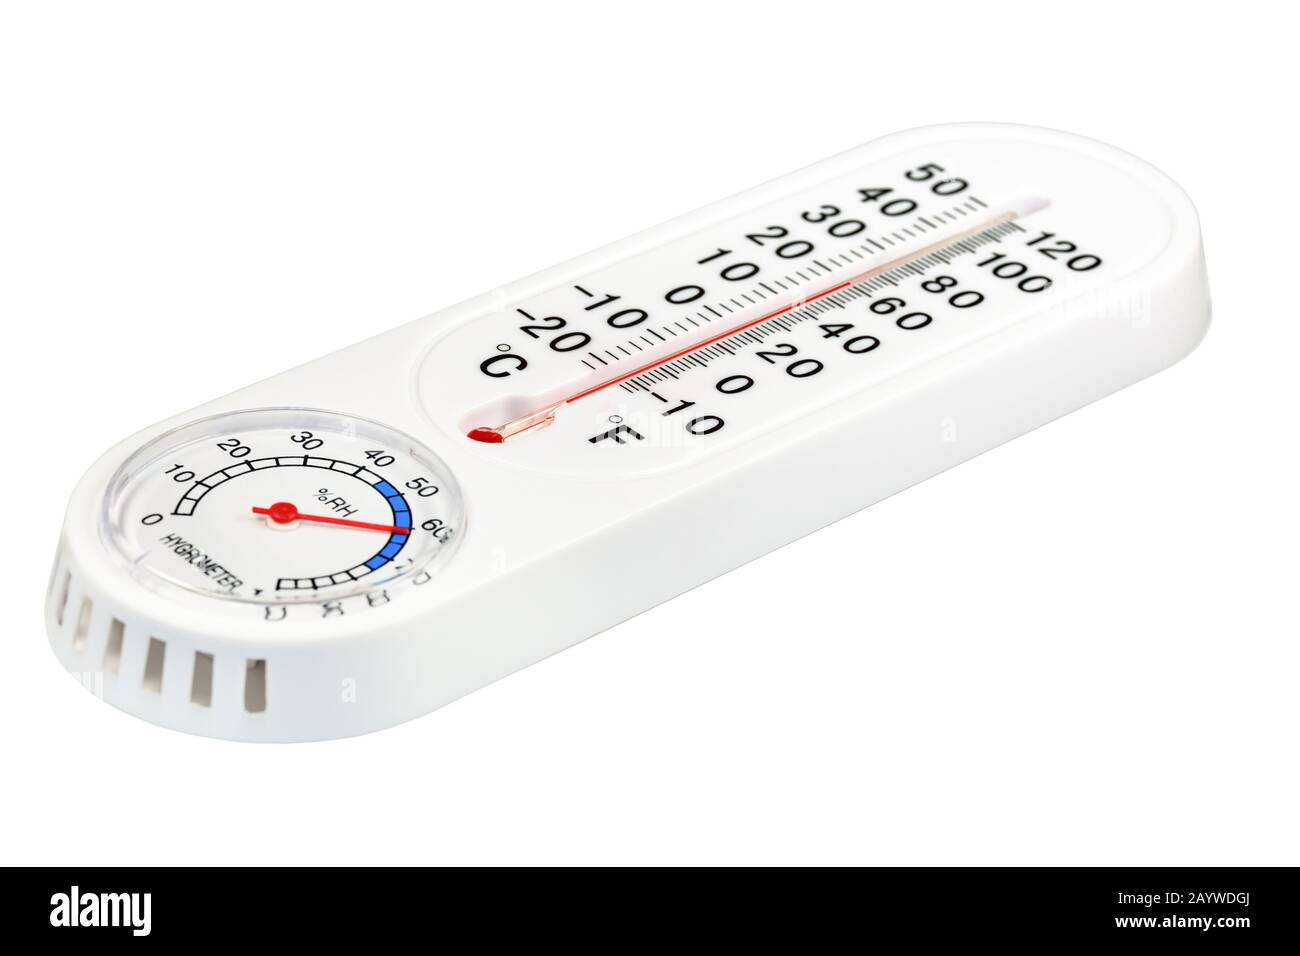 Dispositivo de medición de temperatura instrumento fotografías e de alta - Alamy